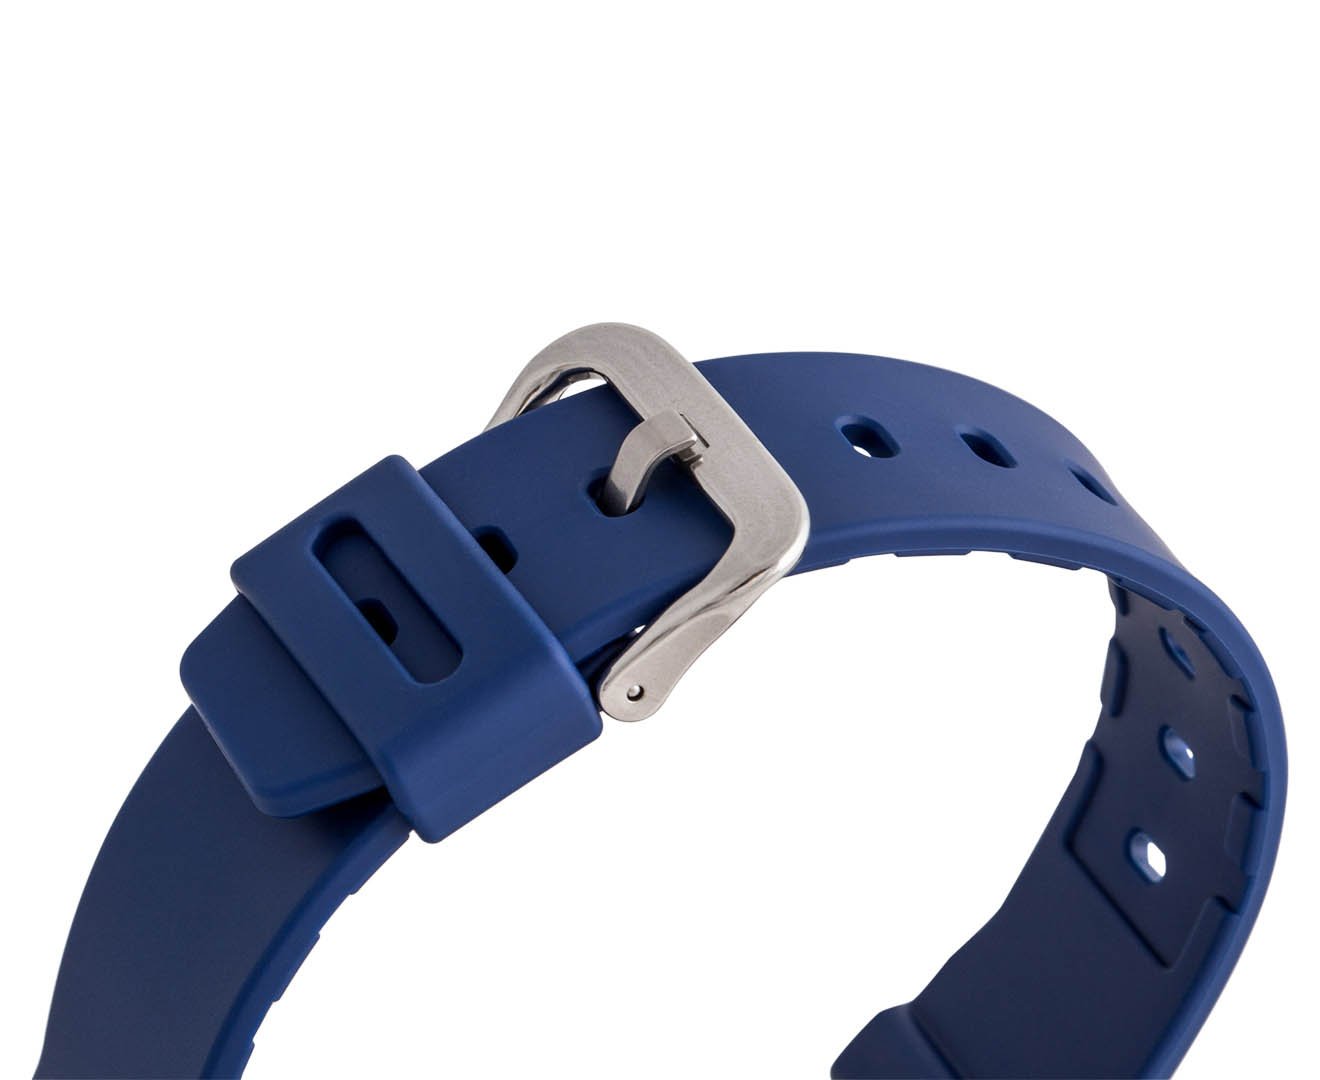 Casio Men's DW9052-2 G-Shock Blue Rubber Digital Dial Watch